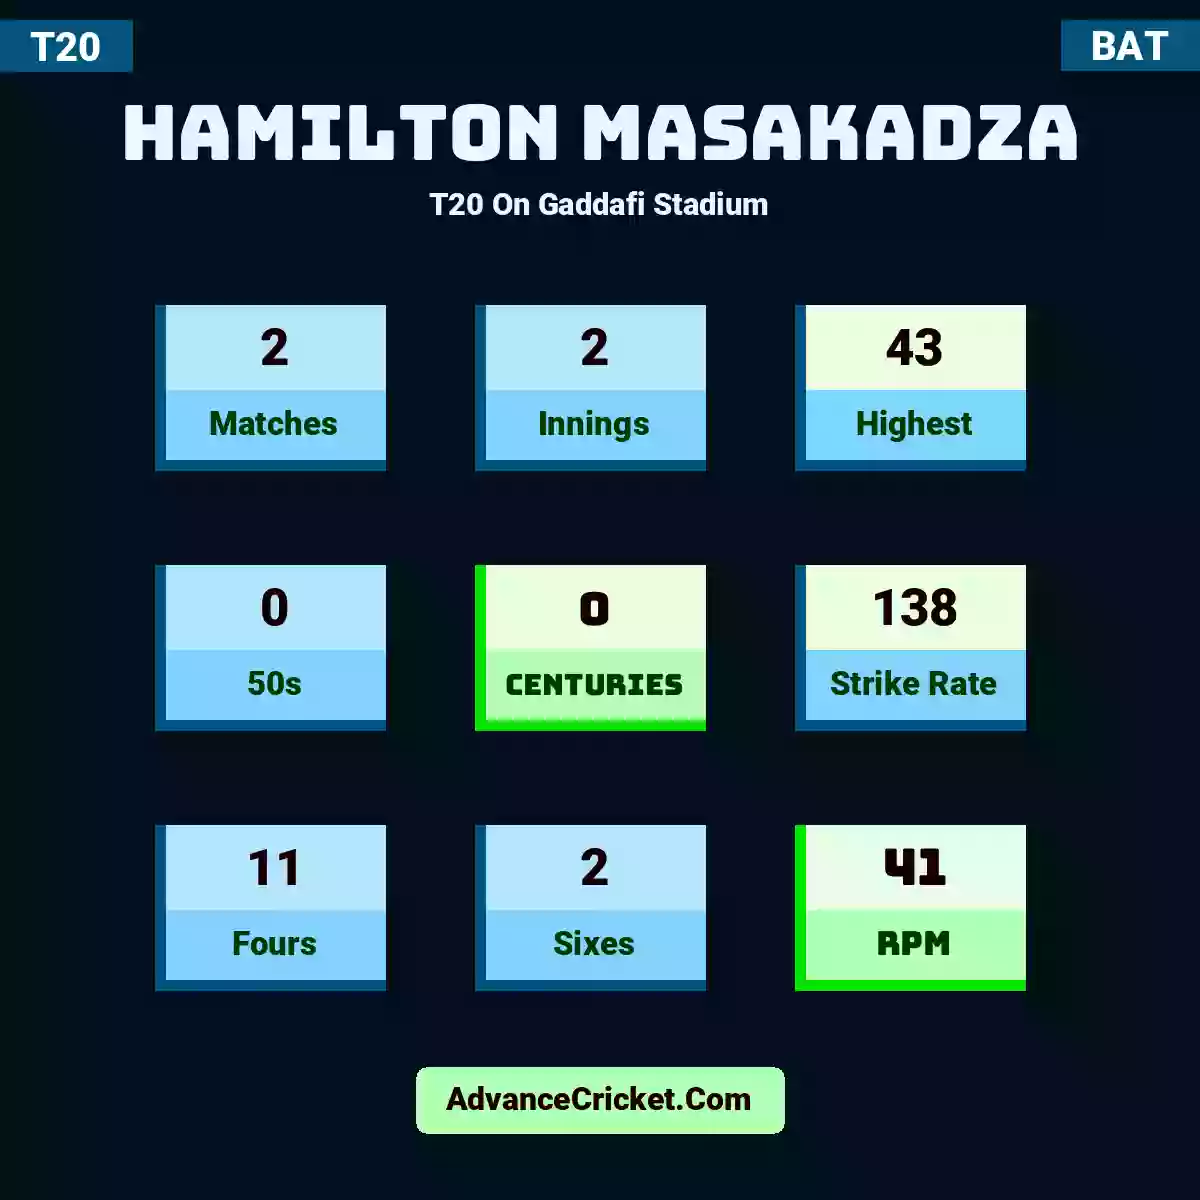 Hamilton Masakadza T20  On Gaddafi Stadium, Hamilton Masakadza played 2 matches, scored 43 runs as highest, 0 half-centuries, and 0 centuries, with a strike rate of 138. H.Masakadza hit 11 fours and 2 sixes, with an RPM of 41.